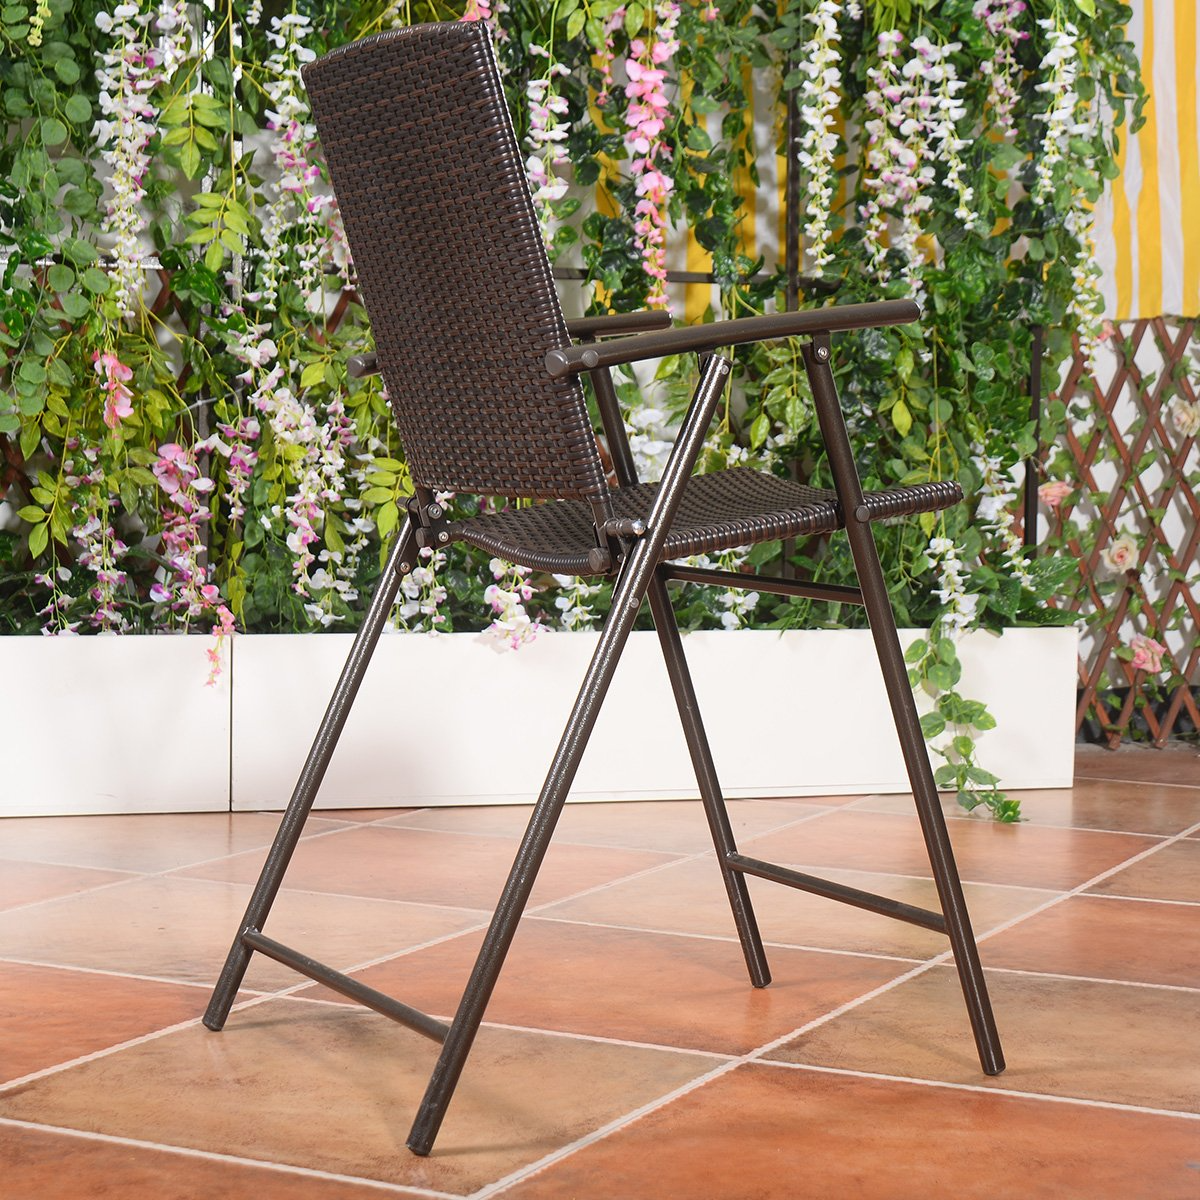 Giantex Folding Wicker Rattan Bar Chairs Tall Stool with Back Steel Frame